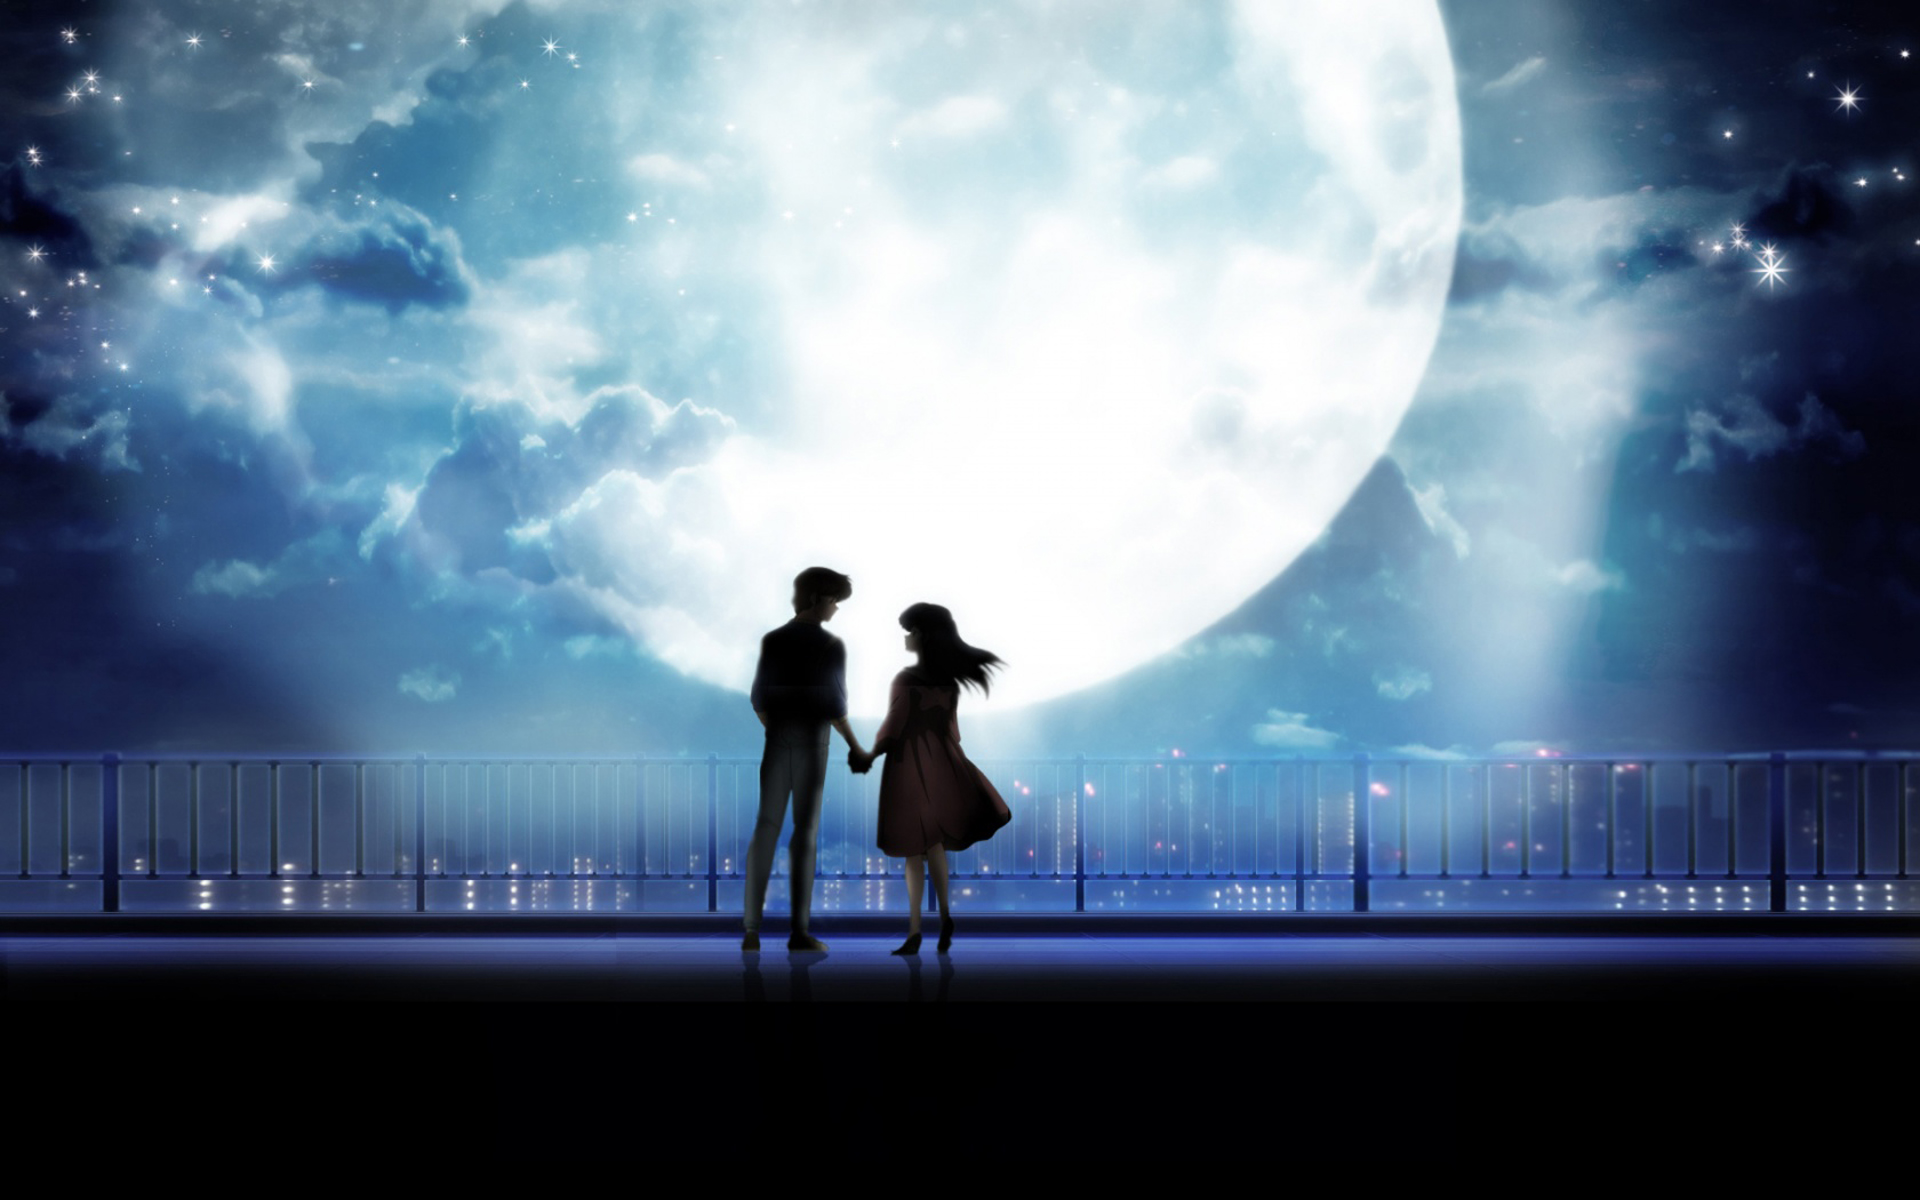 Anime Art Anime Couple Holding Hands Moonlight Desktop : Wallpapers13.com